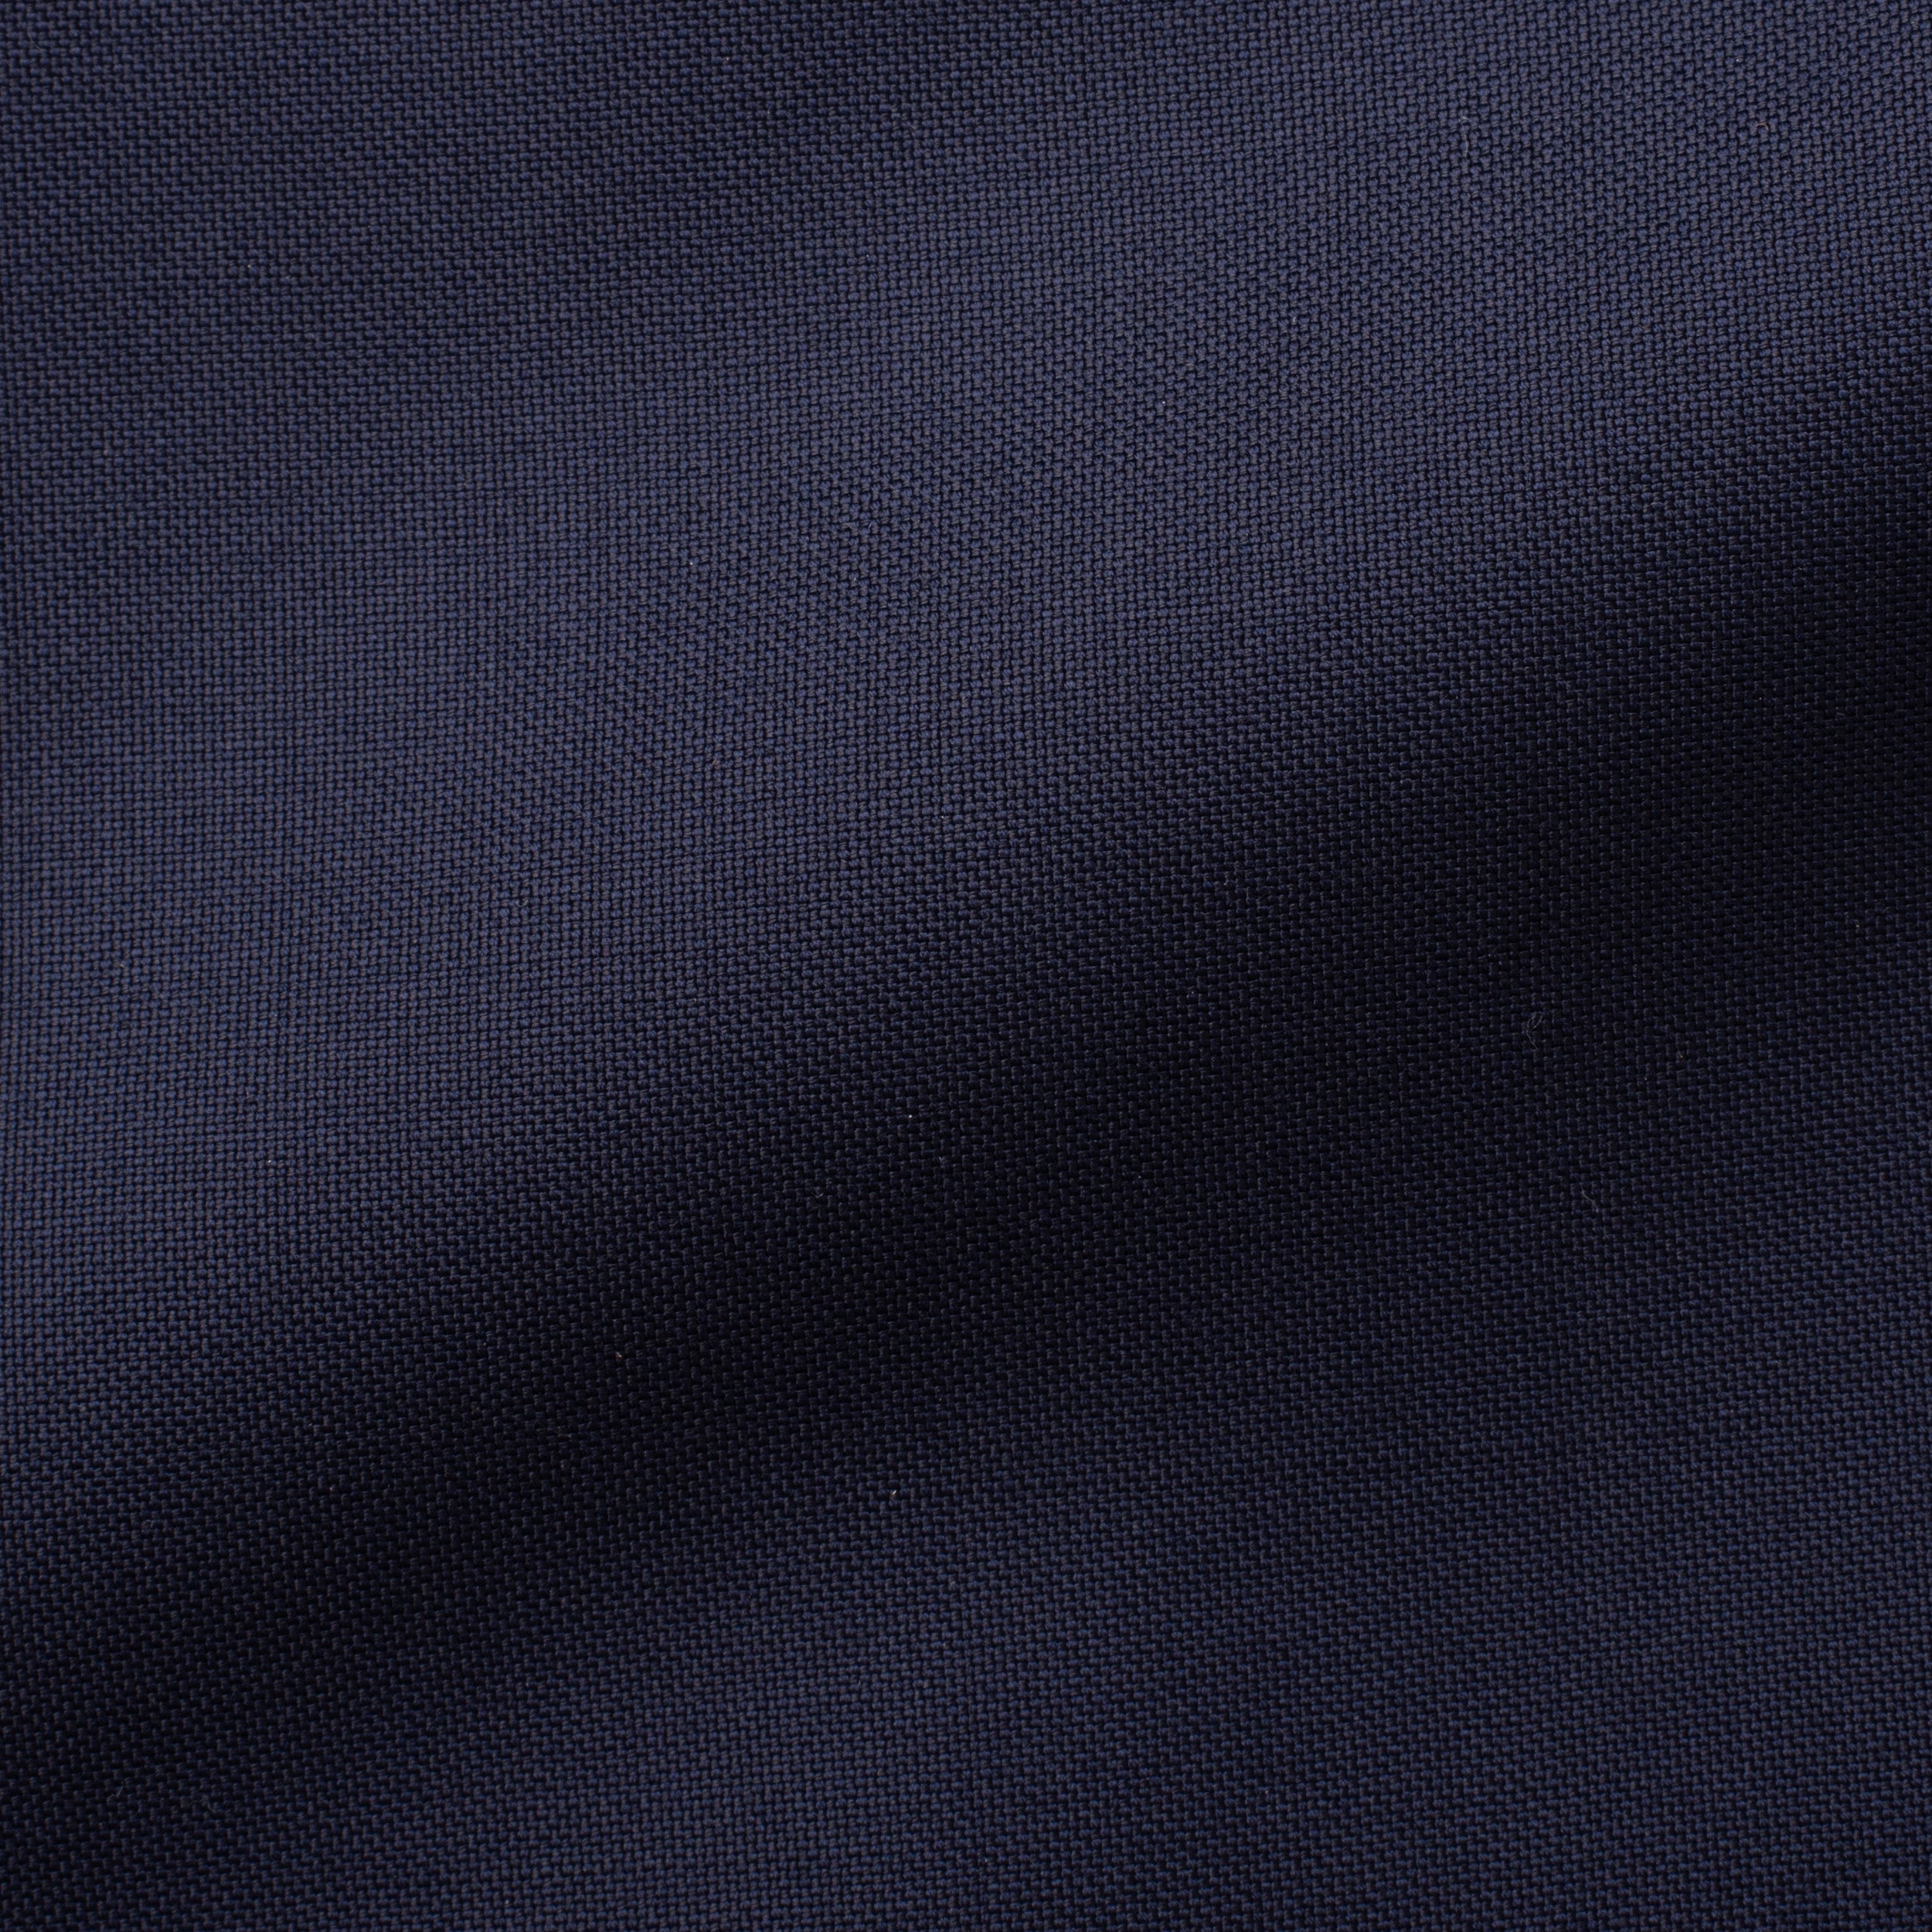 Sartoria CHIAIA Bespoke Handmade Navy Blue Wool DB Jacket EU 44 NEW US 34 SARTORIA CHIAIA